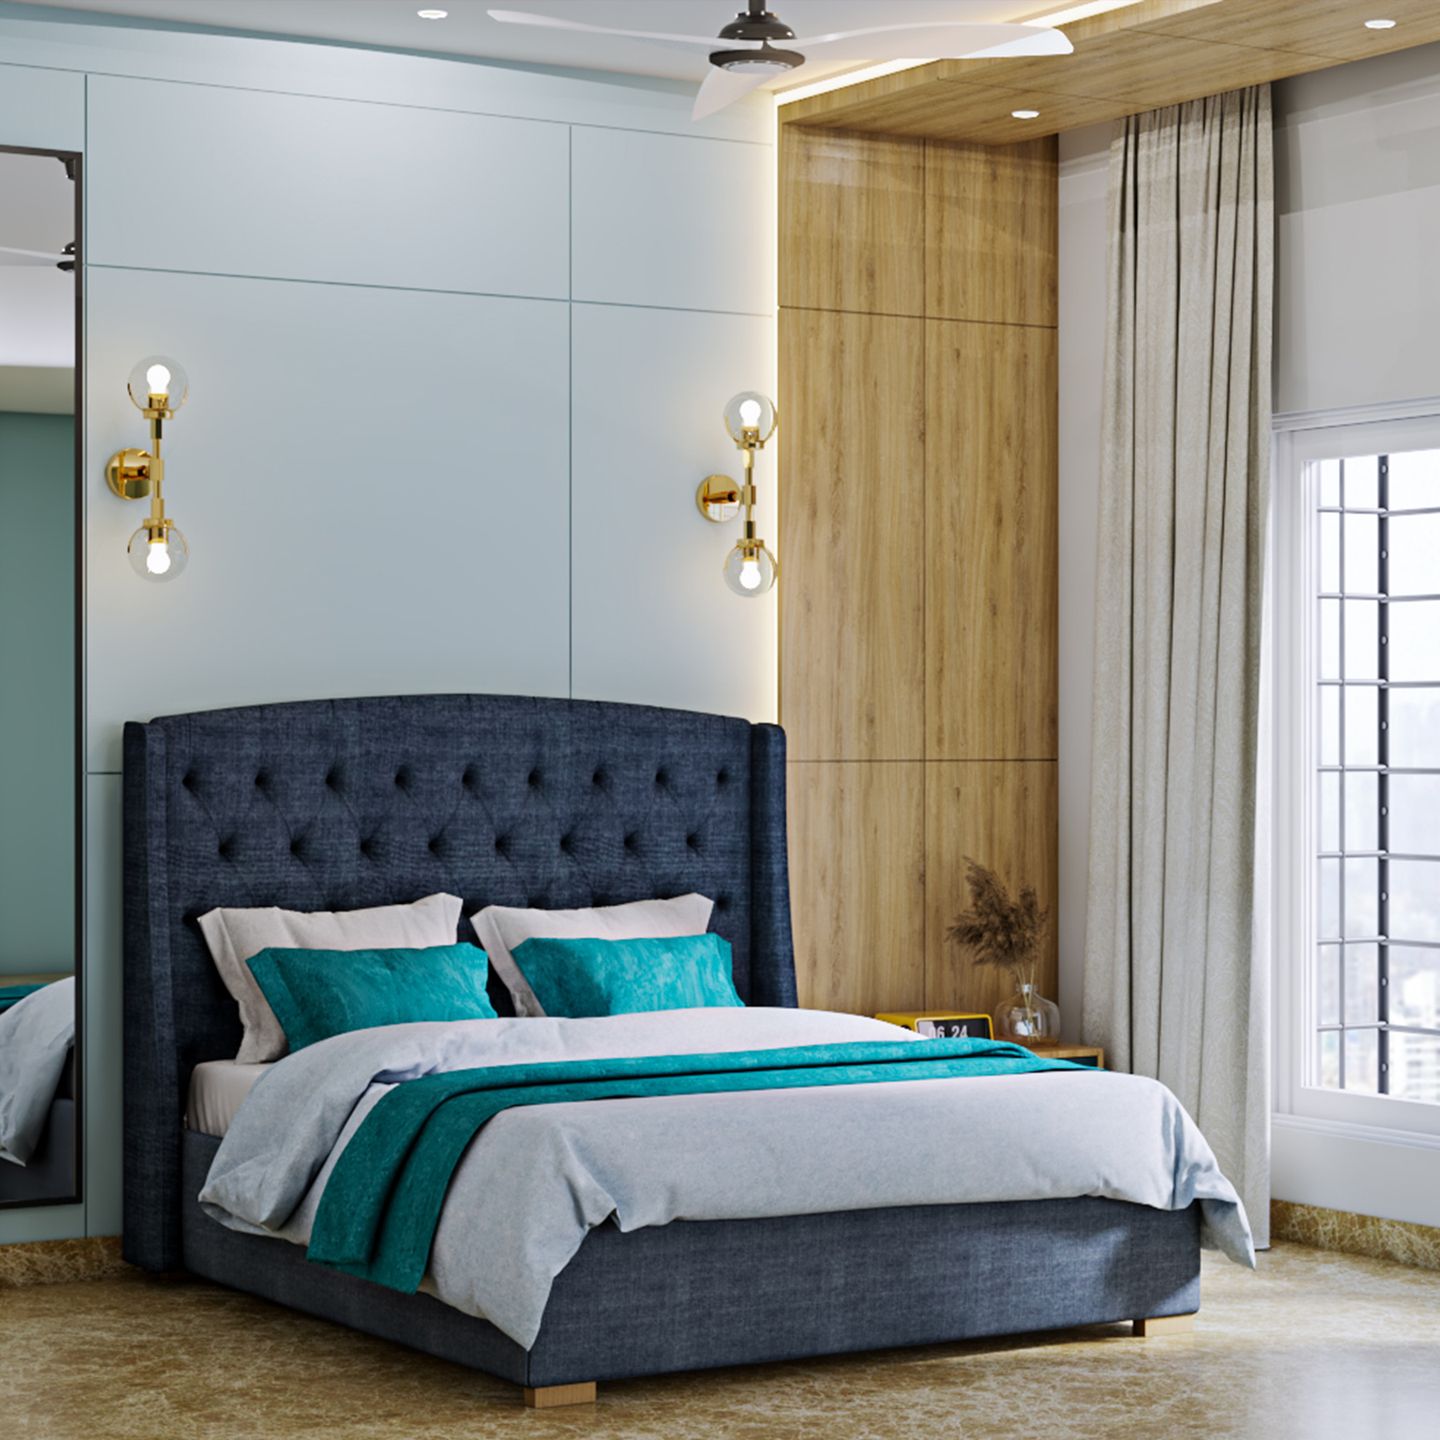 Modern Bedroom For Rental Spaces - Livspace